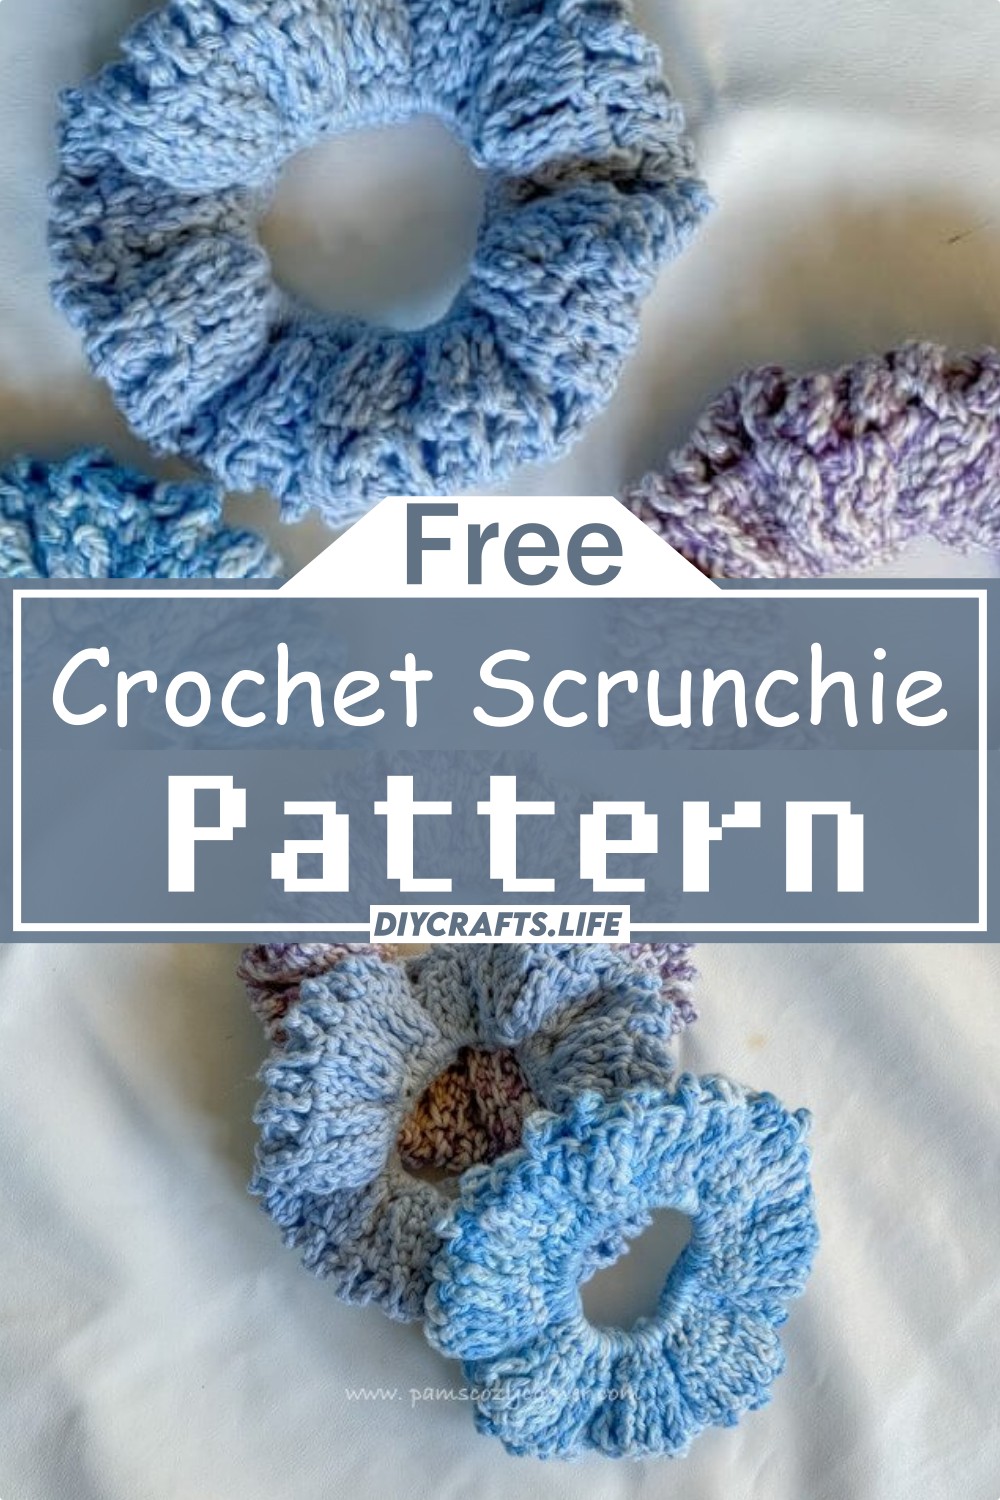 How To Make A Crochet Scrunchie